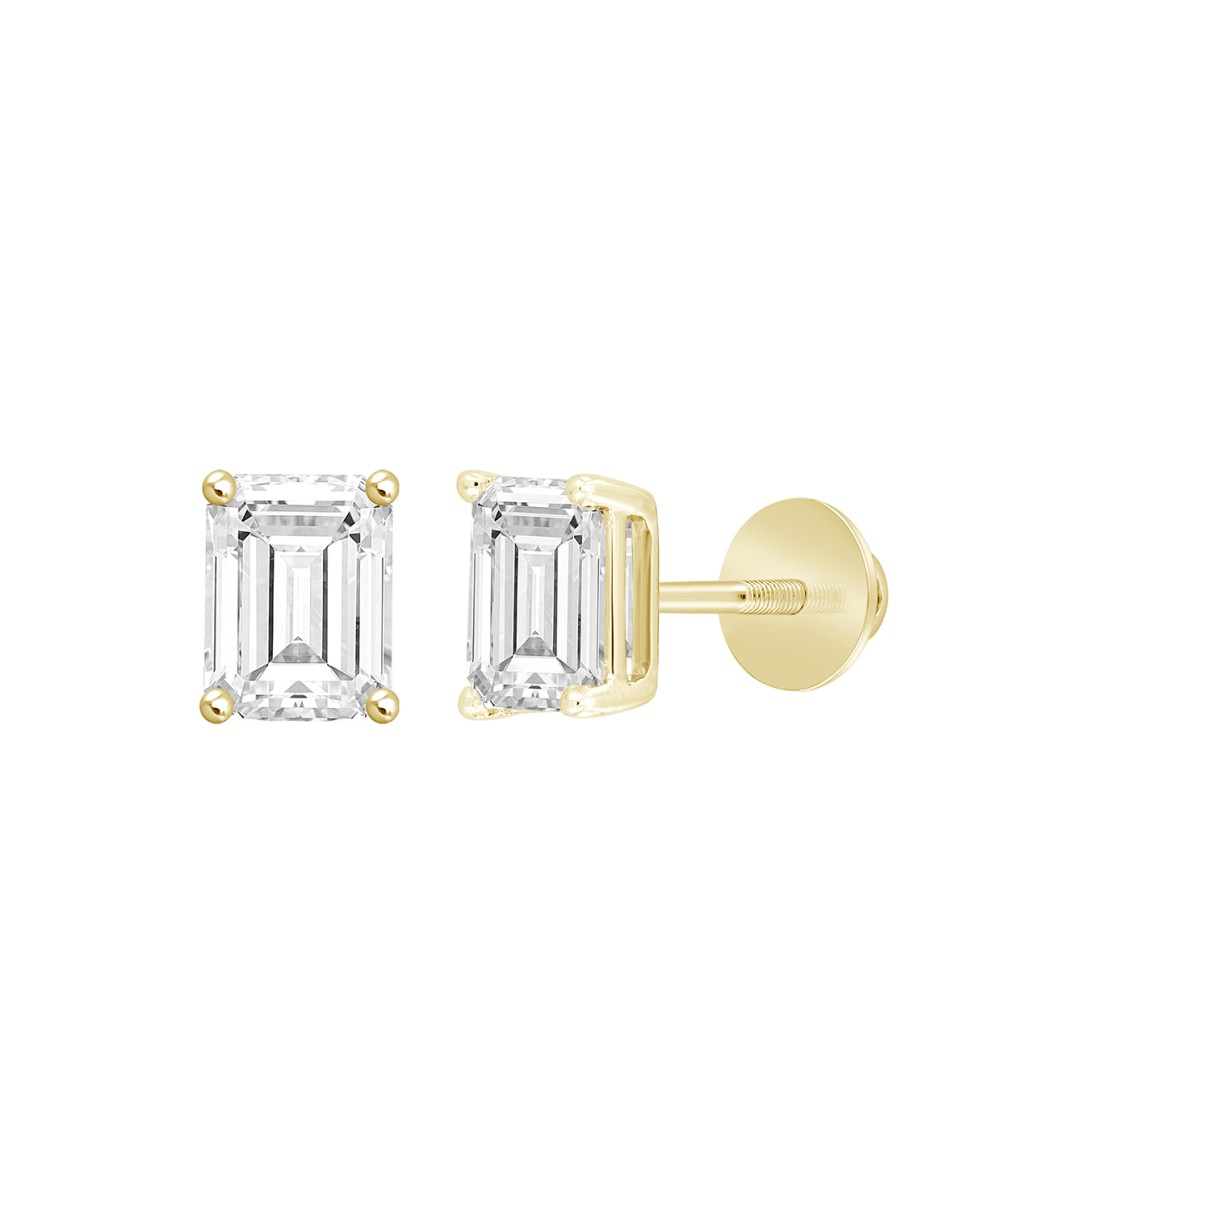 14K YELLOW GOLD 3CT EMERALD DIAMOND LADIES EARRINGS